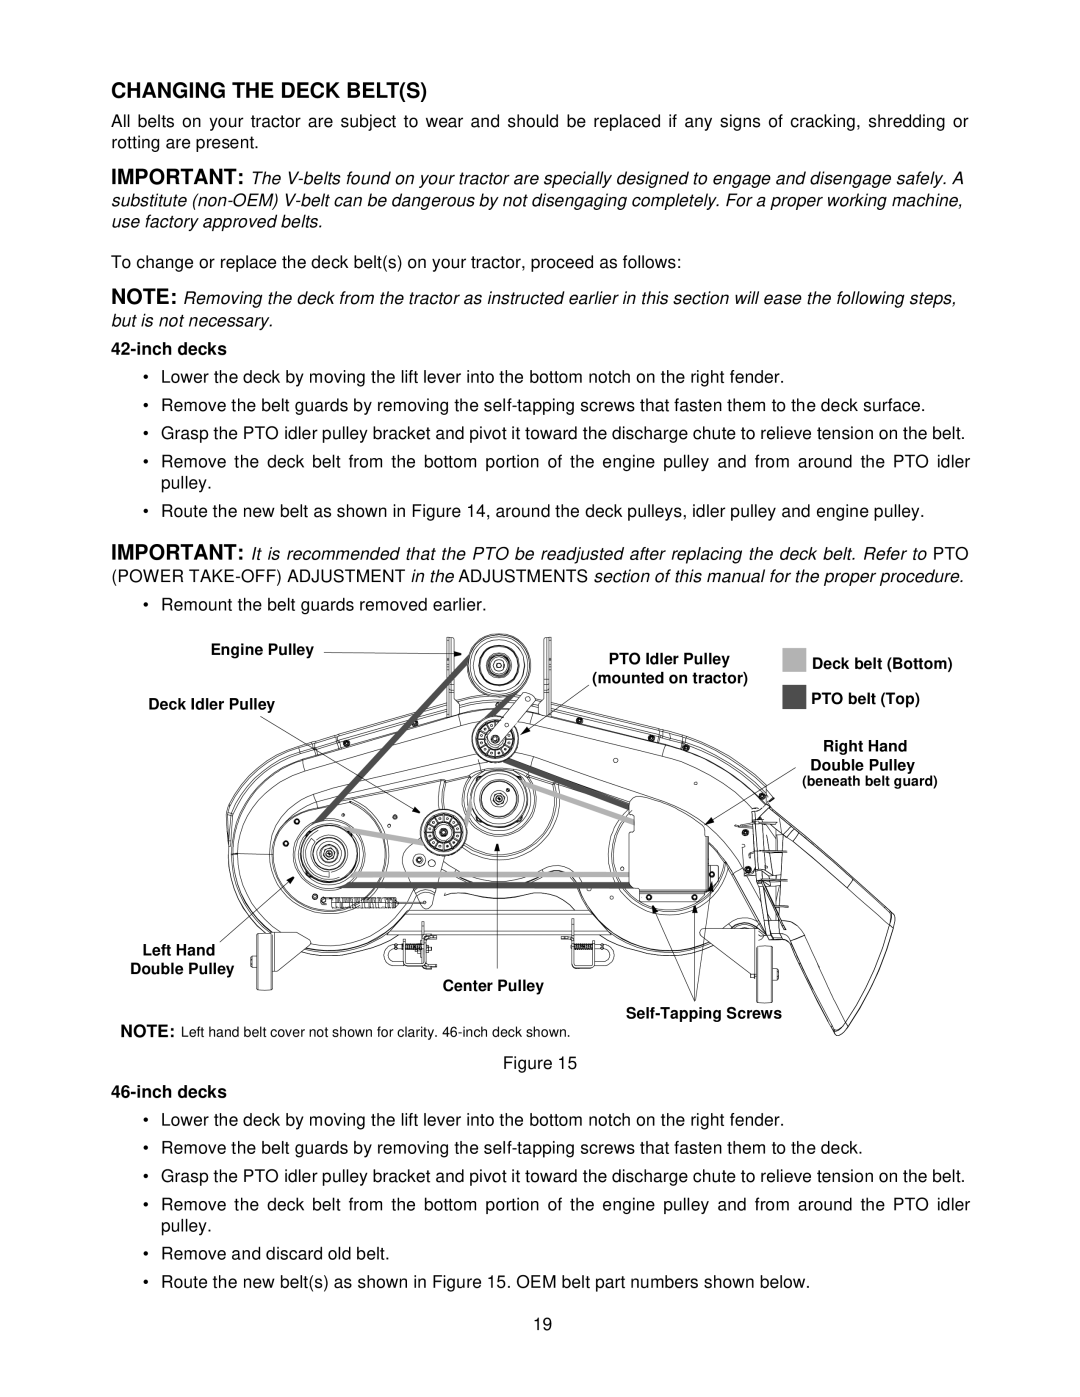 Troy-Bilt 604 manual Changing The Deck Belts, inchdecks 